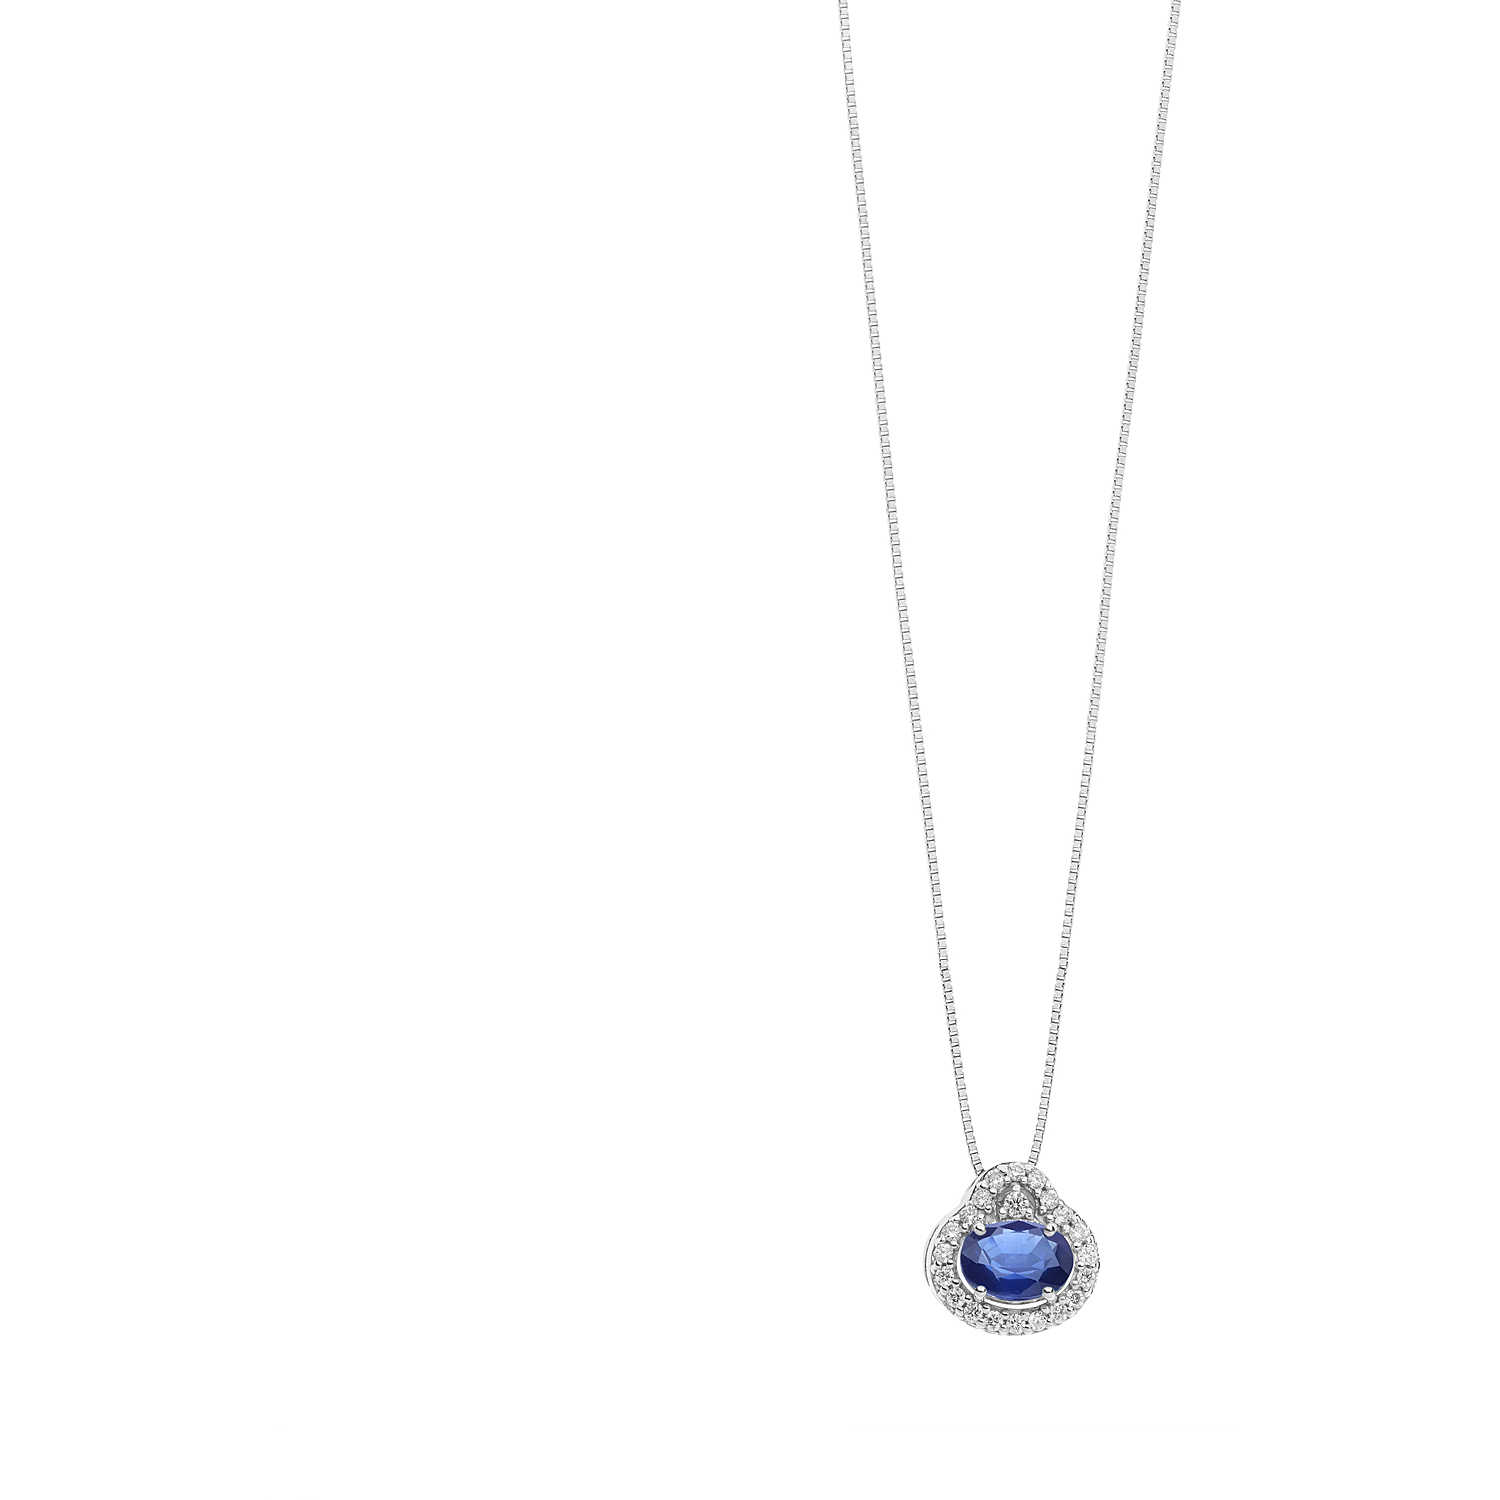 Orion GLB 1478 Women’s Jewelry Necklace